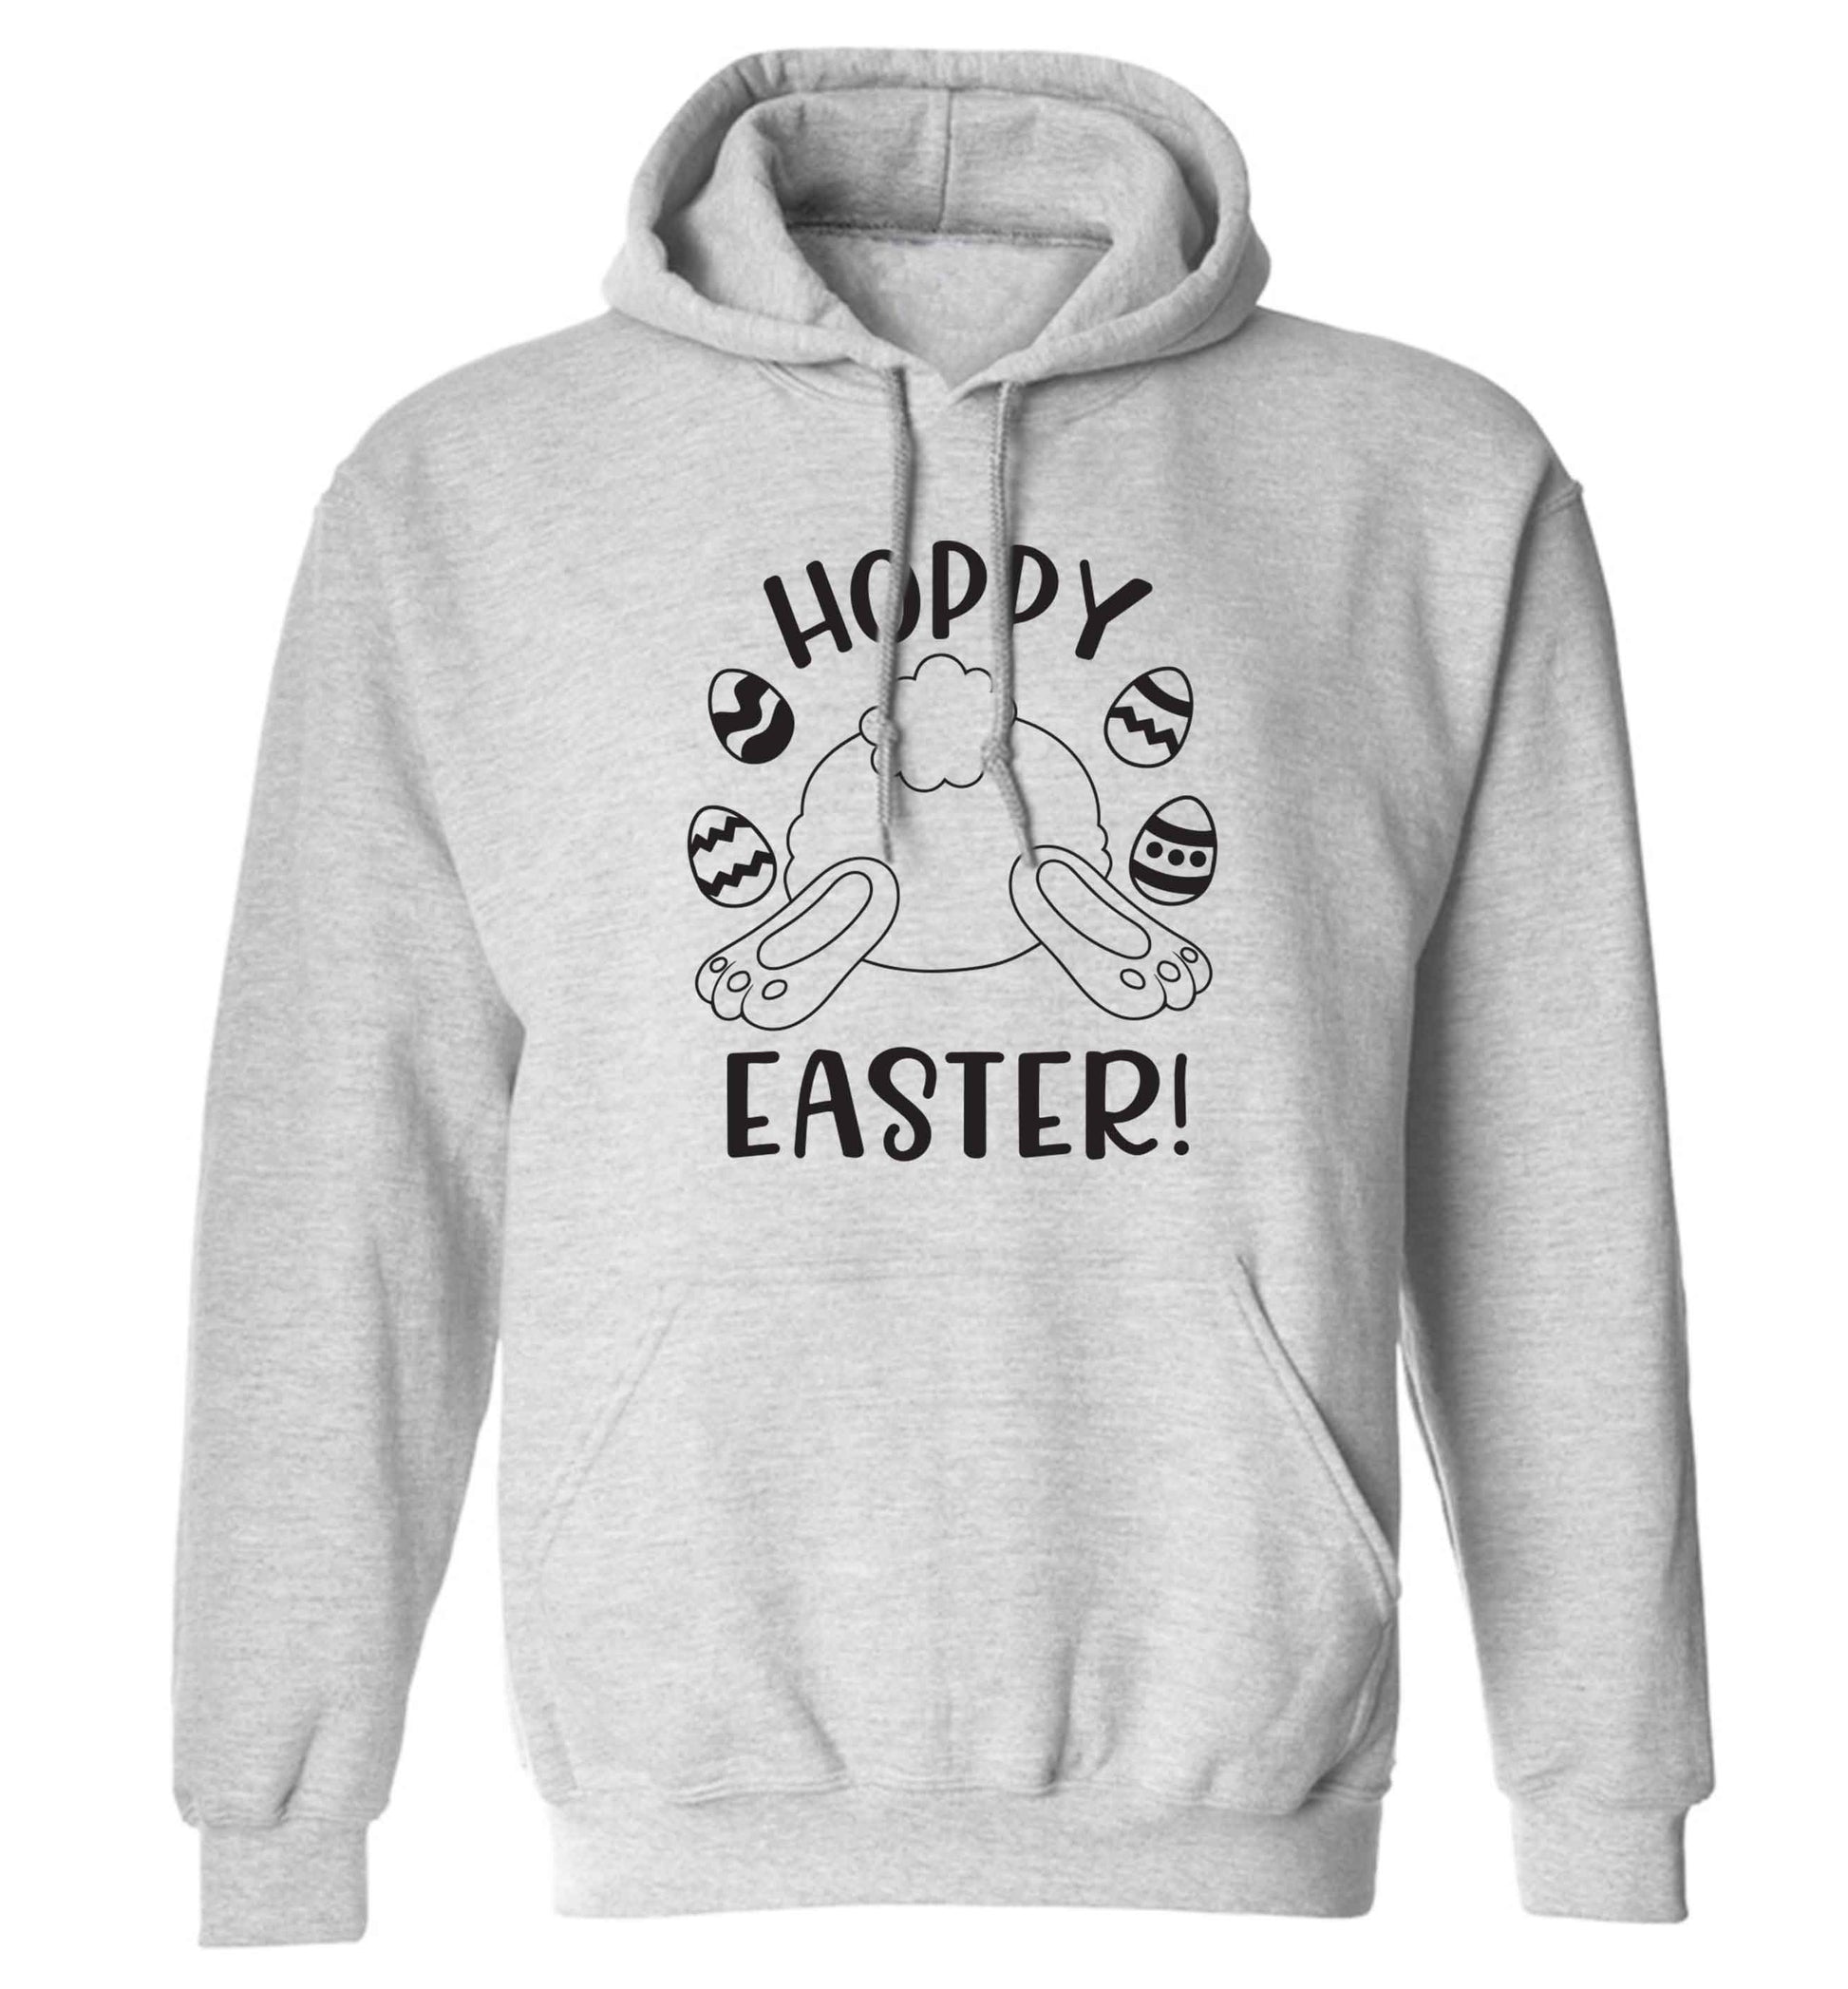 Hoppy Easter adults unisex grey hoodie 2XL